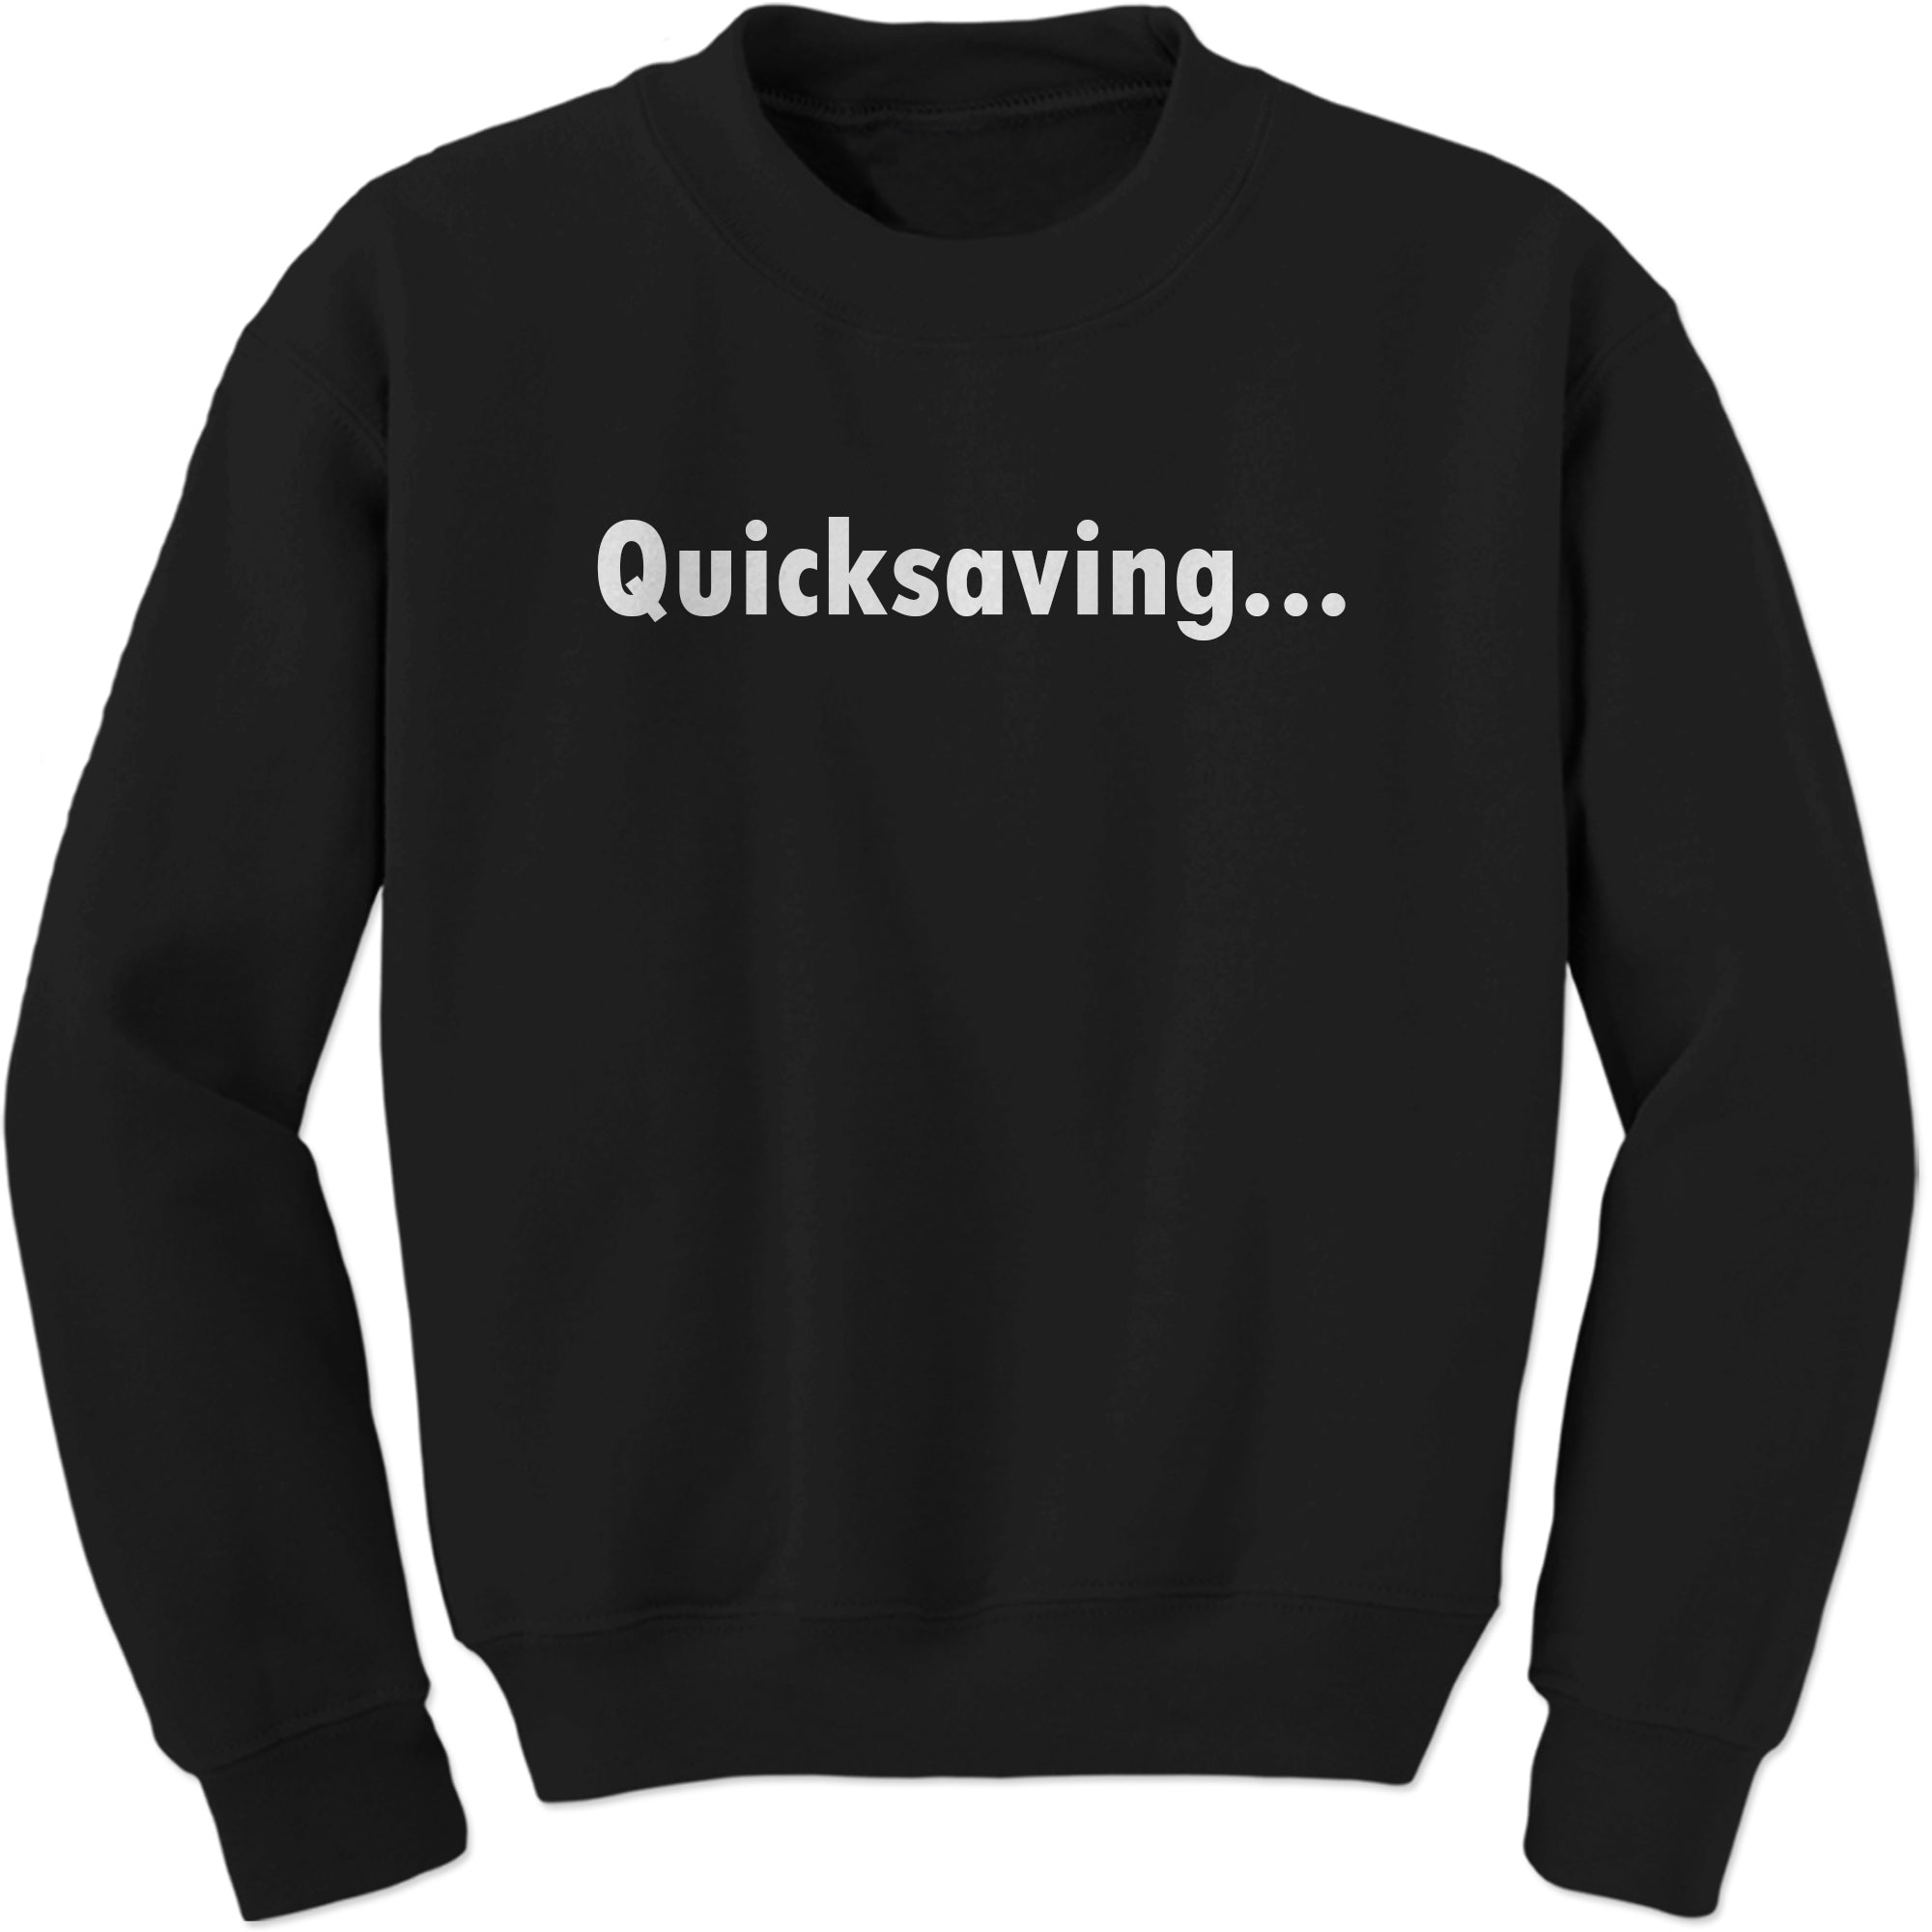 Quicksaving Funny Gamer Sweatshirt